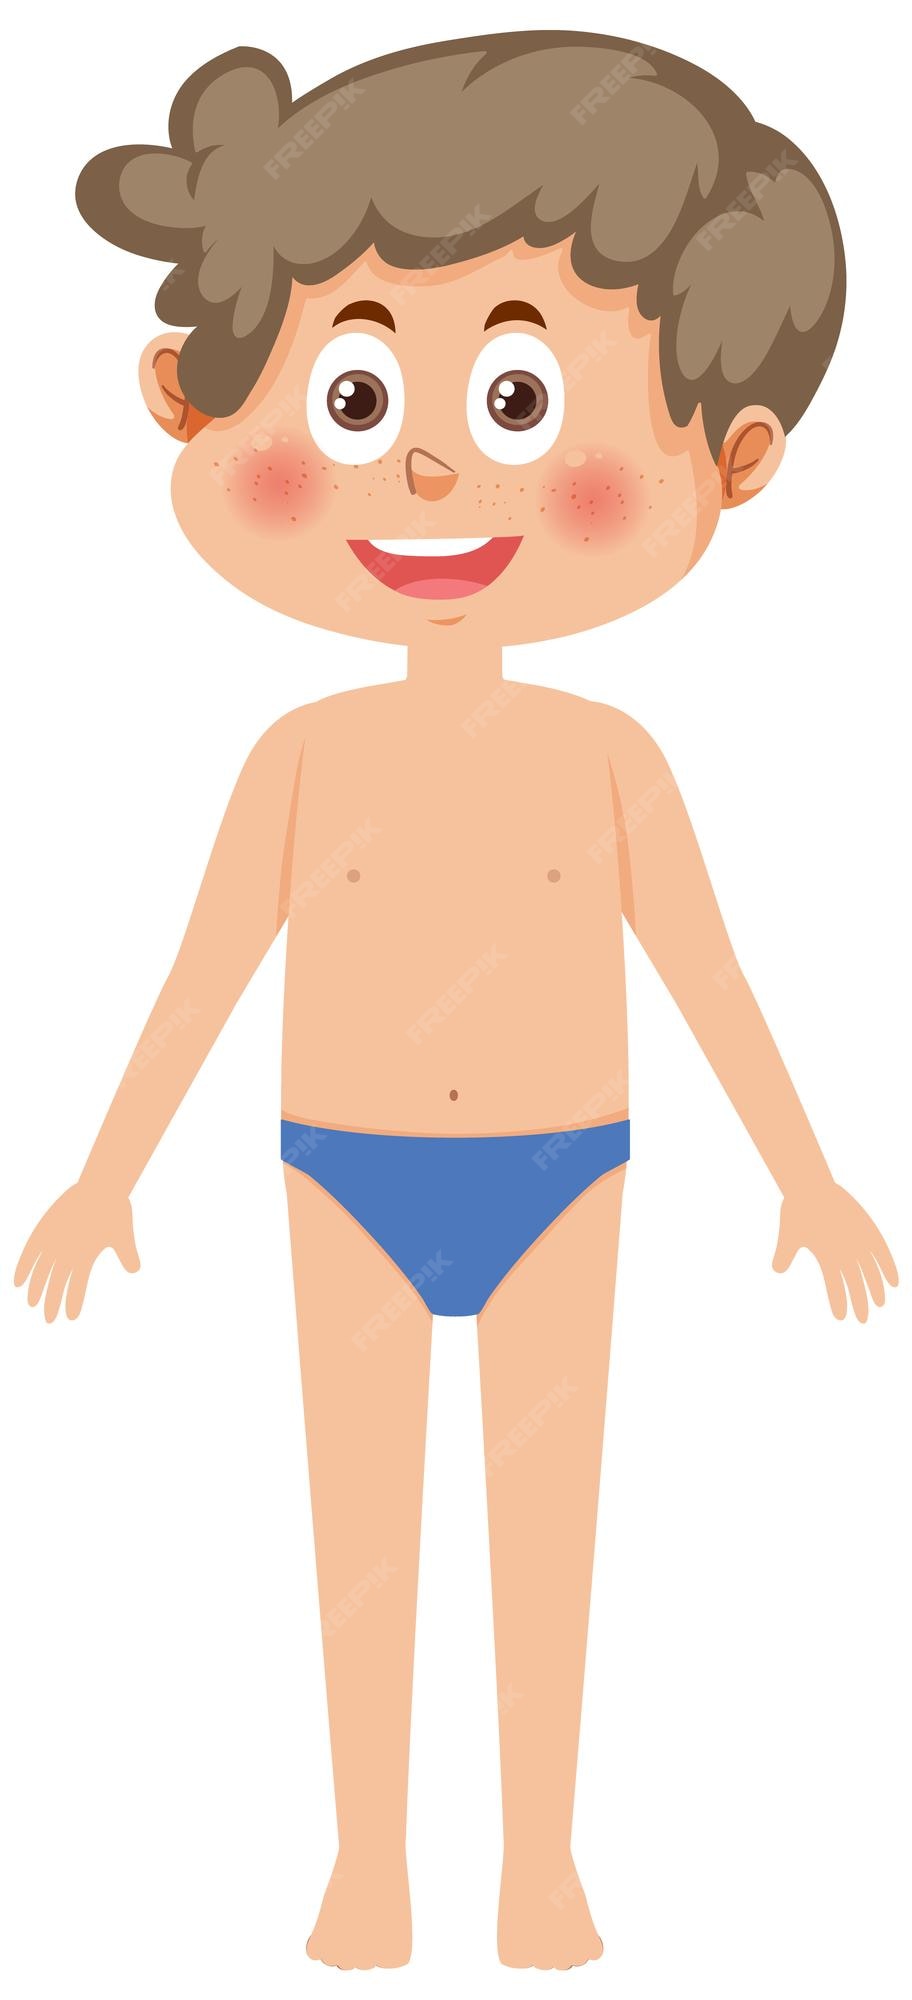 Premium Vector | Cute boy cartoon character in swimming suit